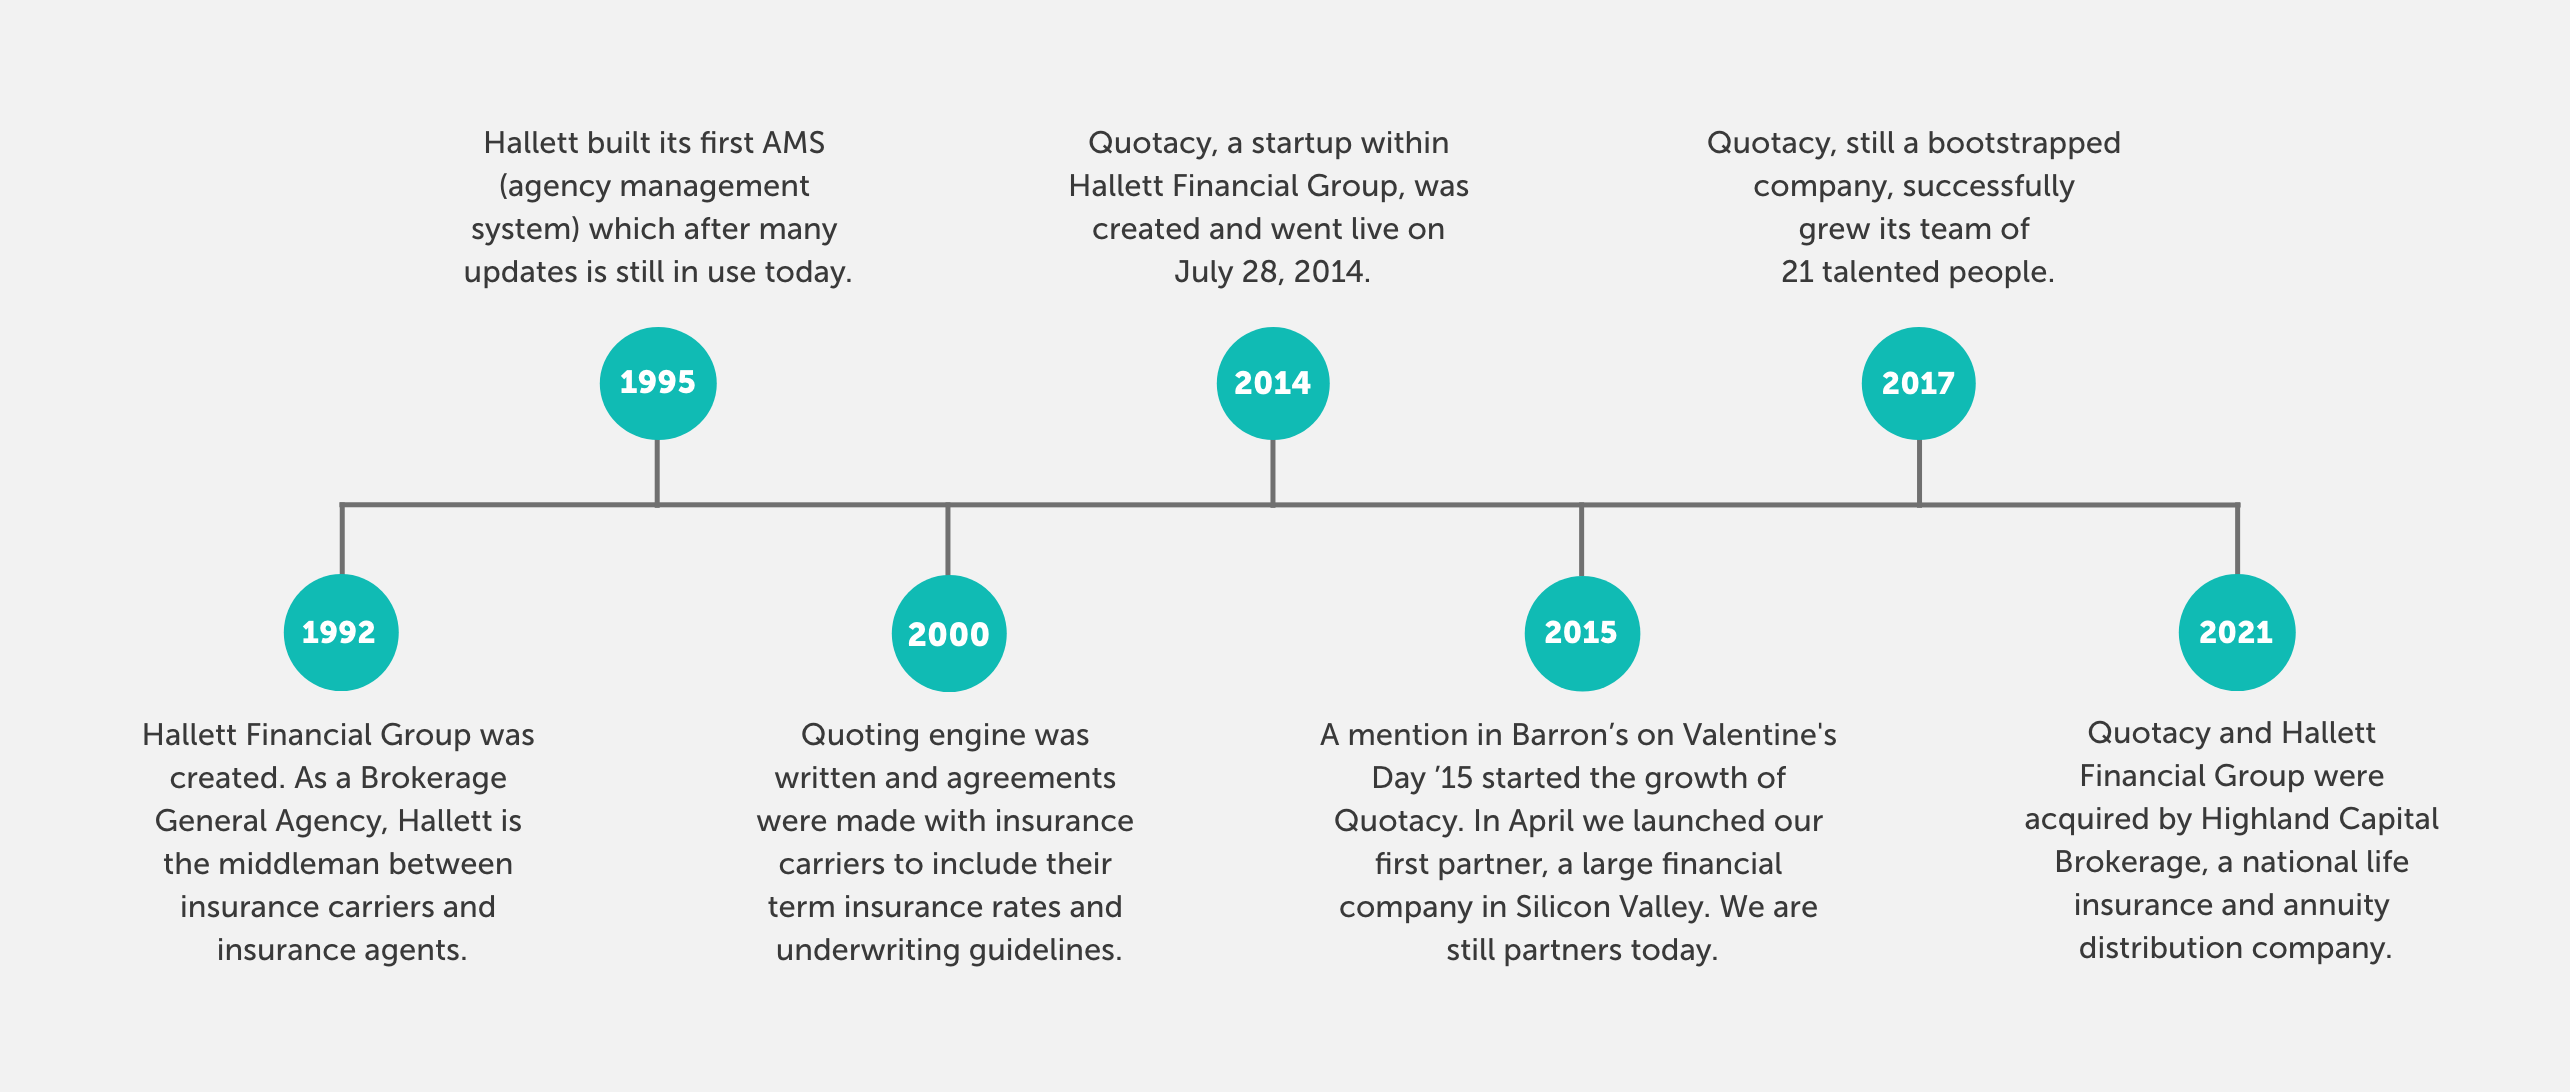 Quotacy, Inc. company history timeline.